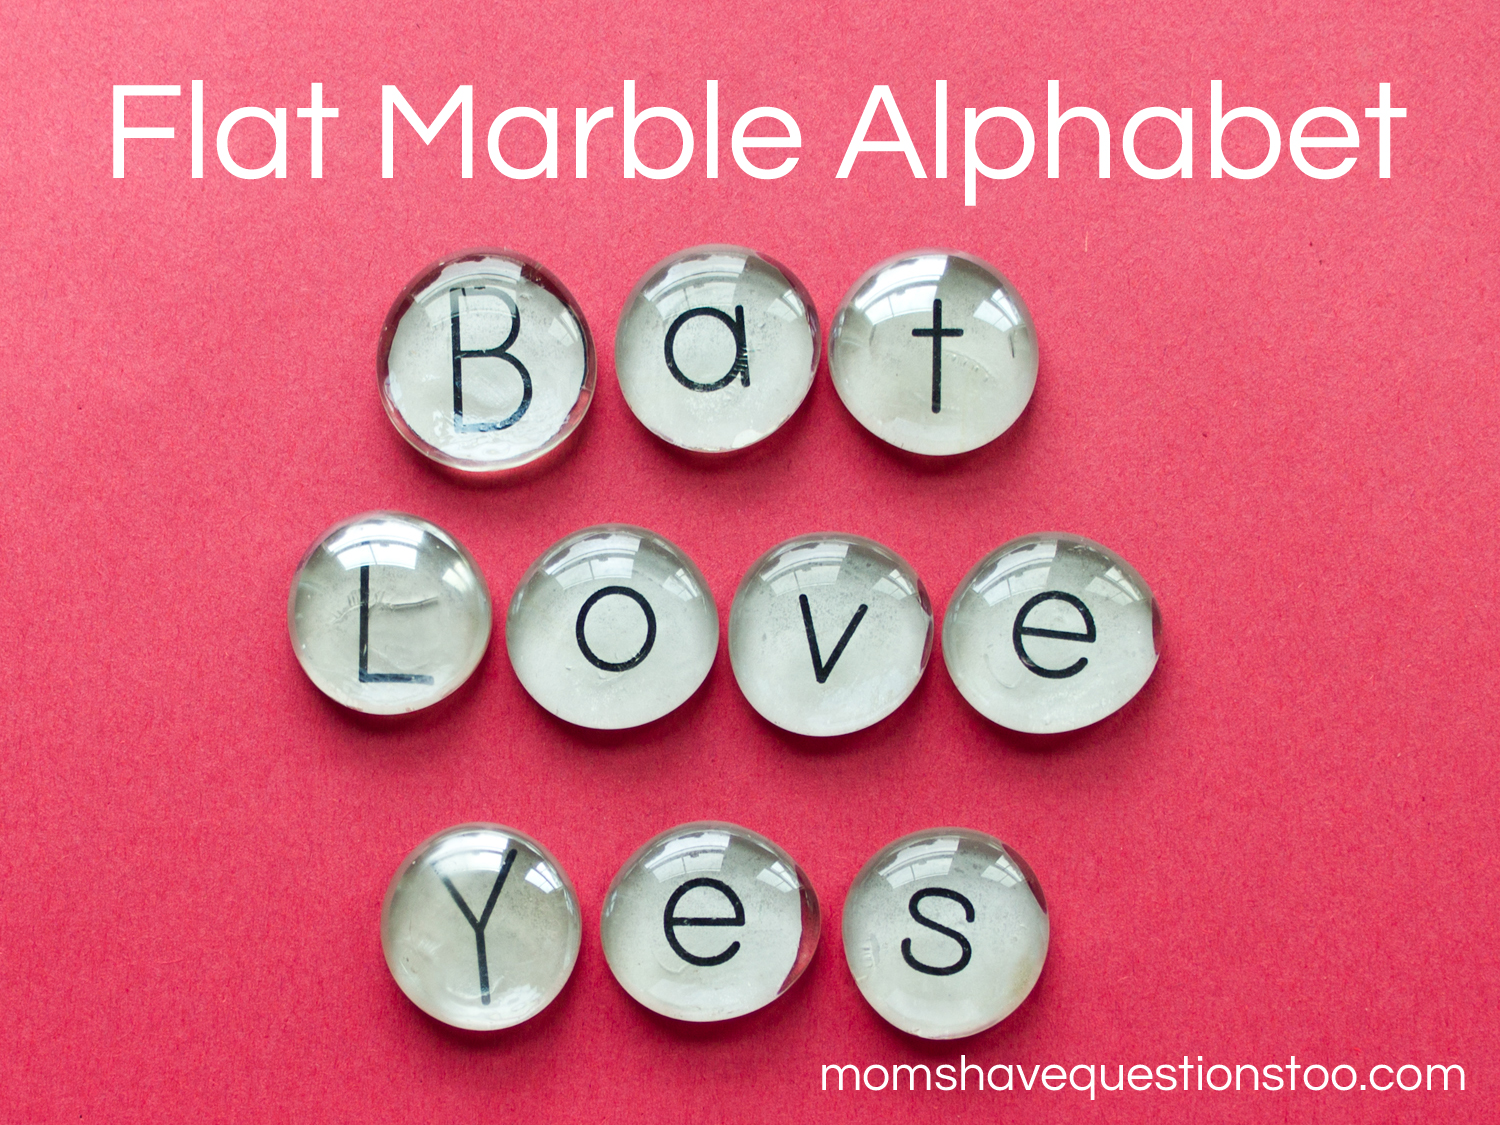 Flat Marble Alphabet Tutorial